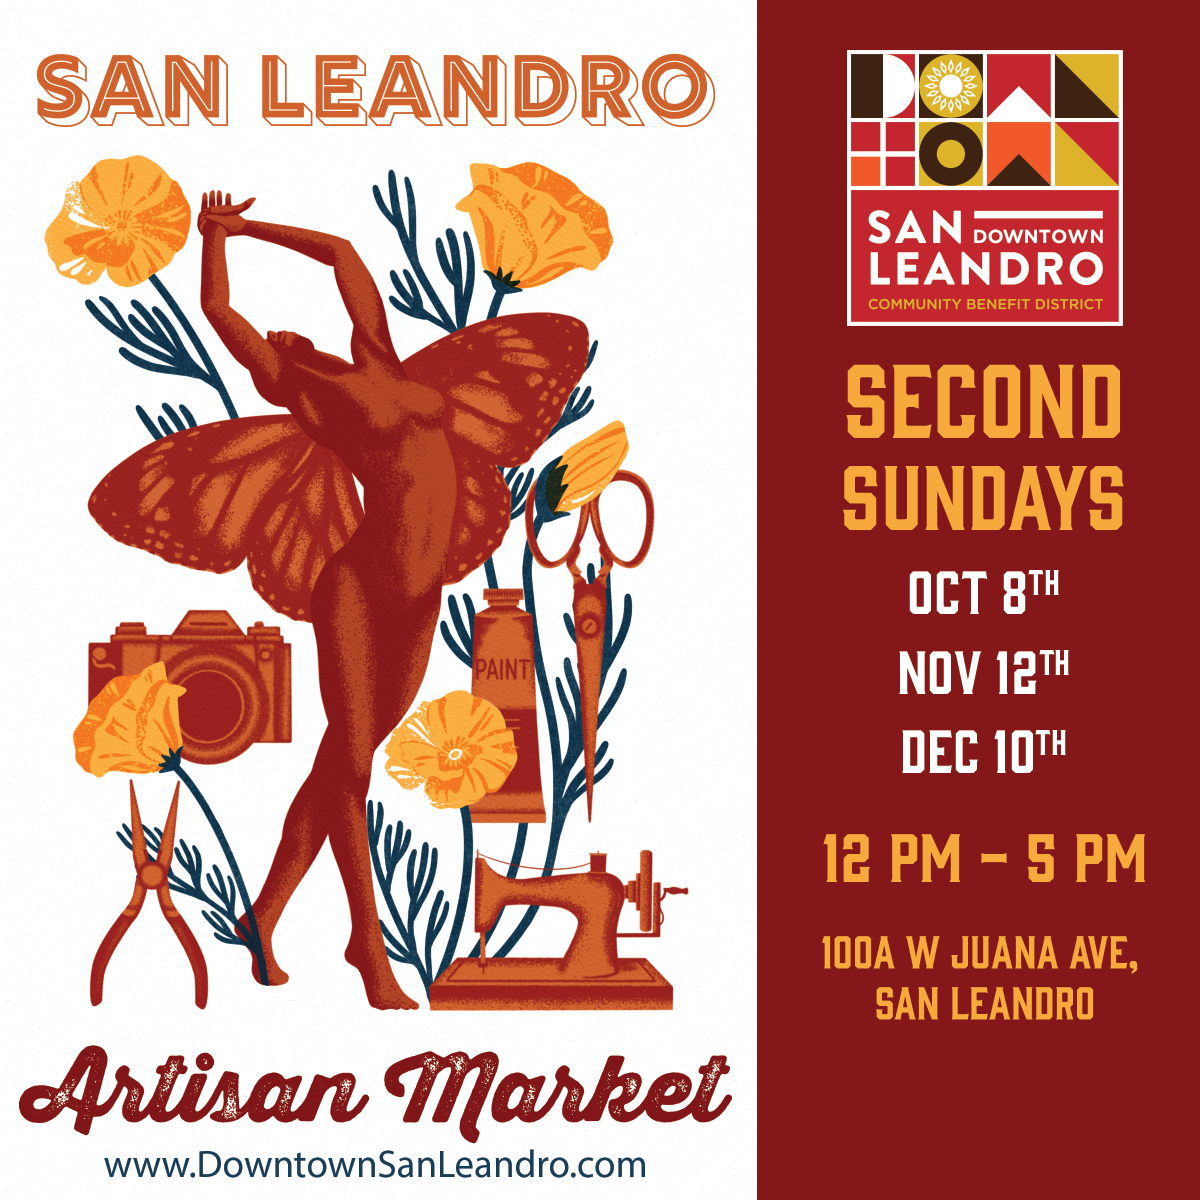 San Leandro art market